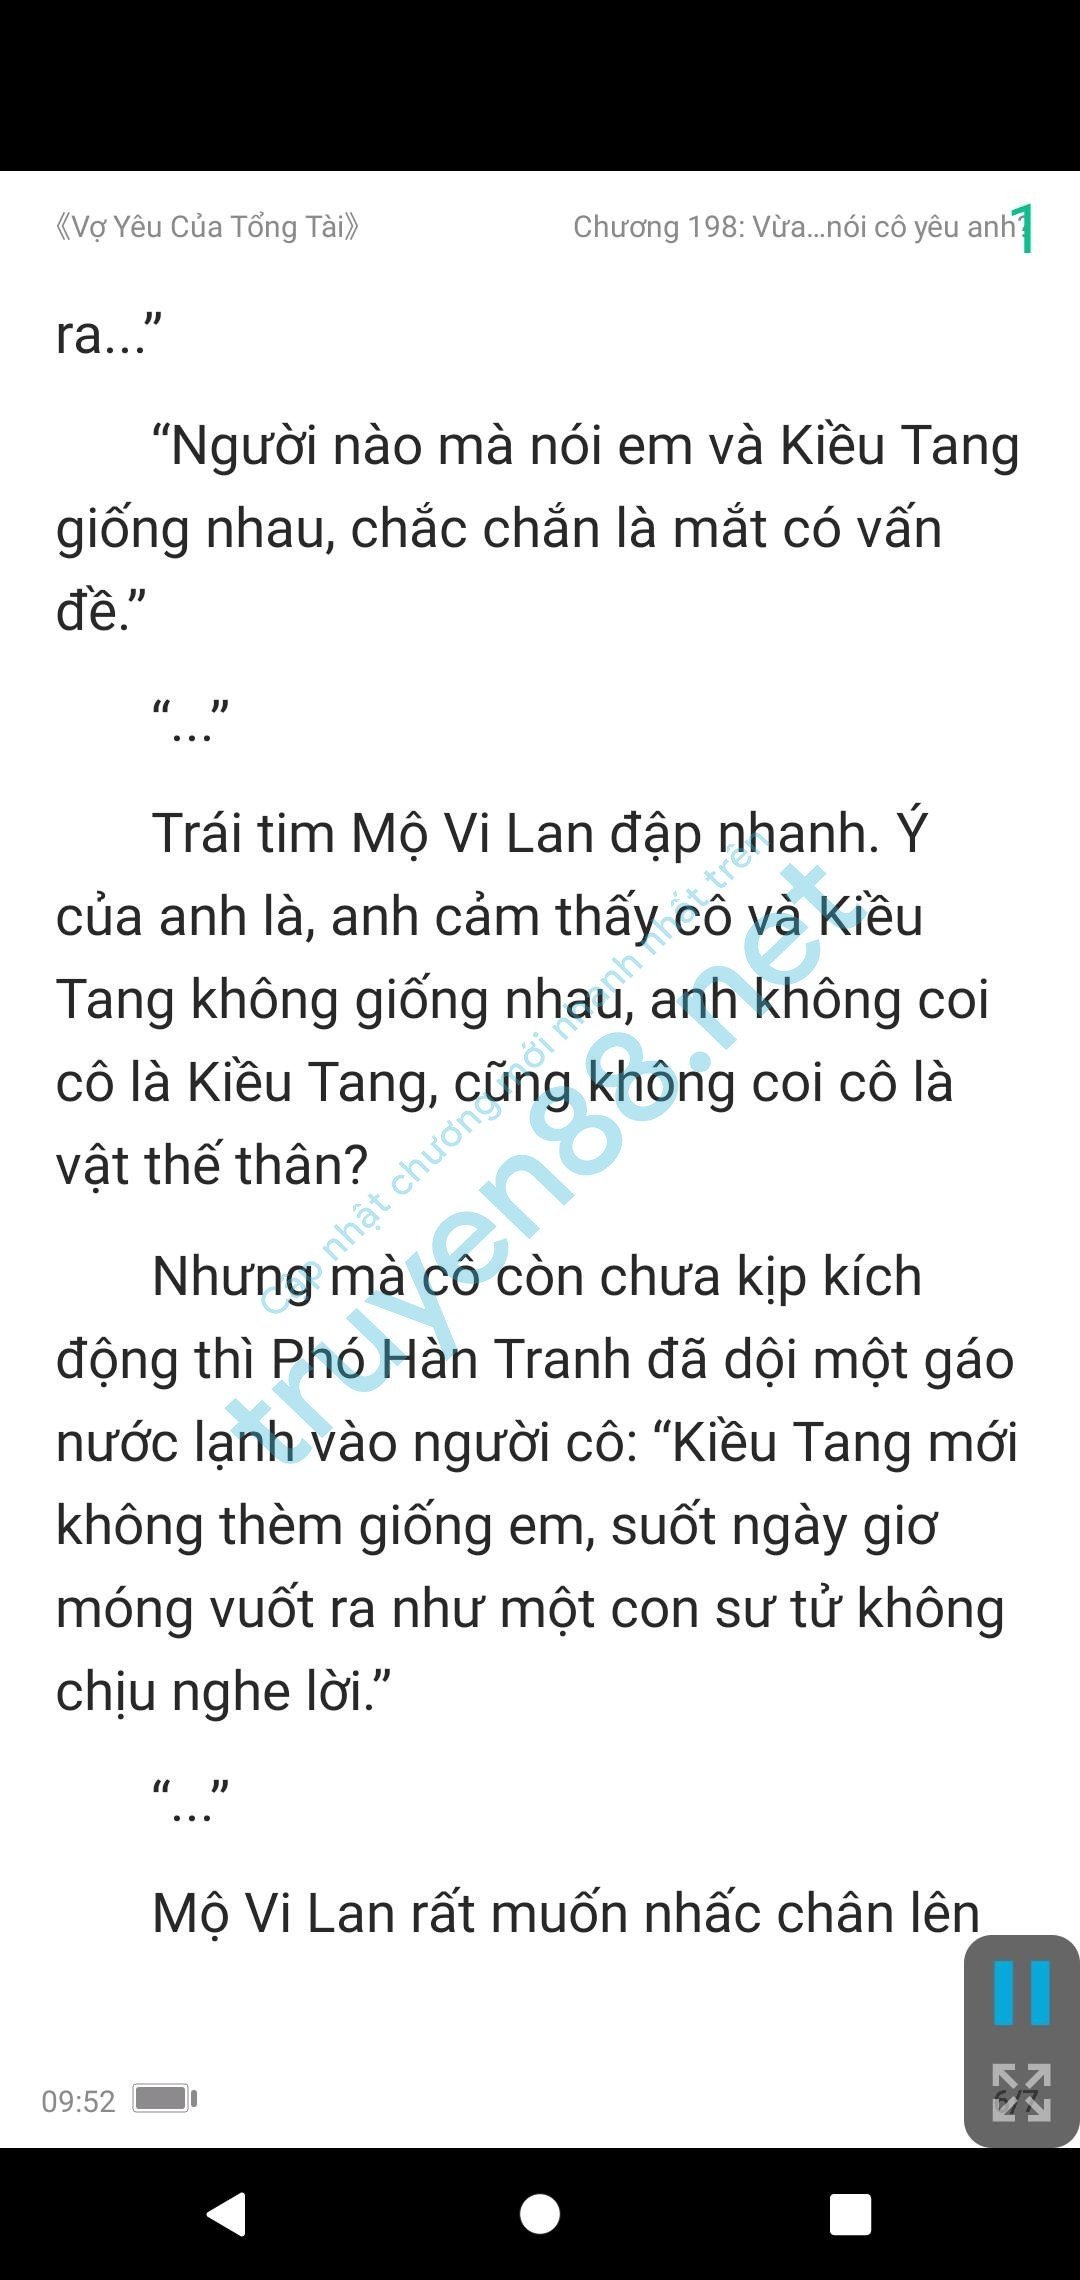 vo-yeu-cua-tong-tai-mo-vi-lan--pho-han-tranh-198-2